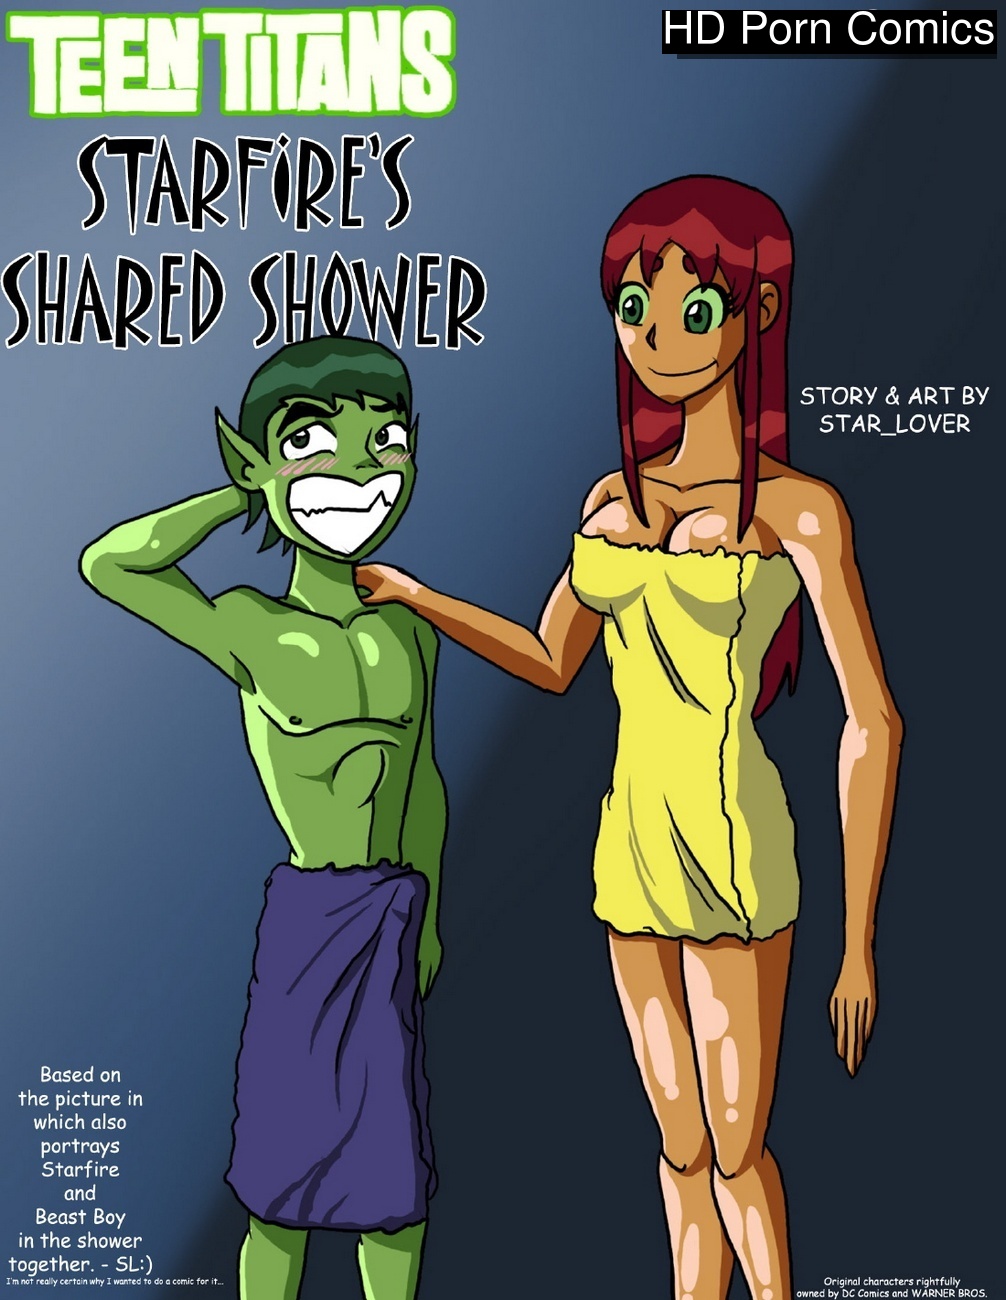 Titns Starfiresex - Starfire's Shared Shower Sex Comic - HD Porn Comics